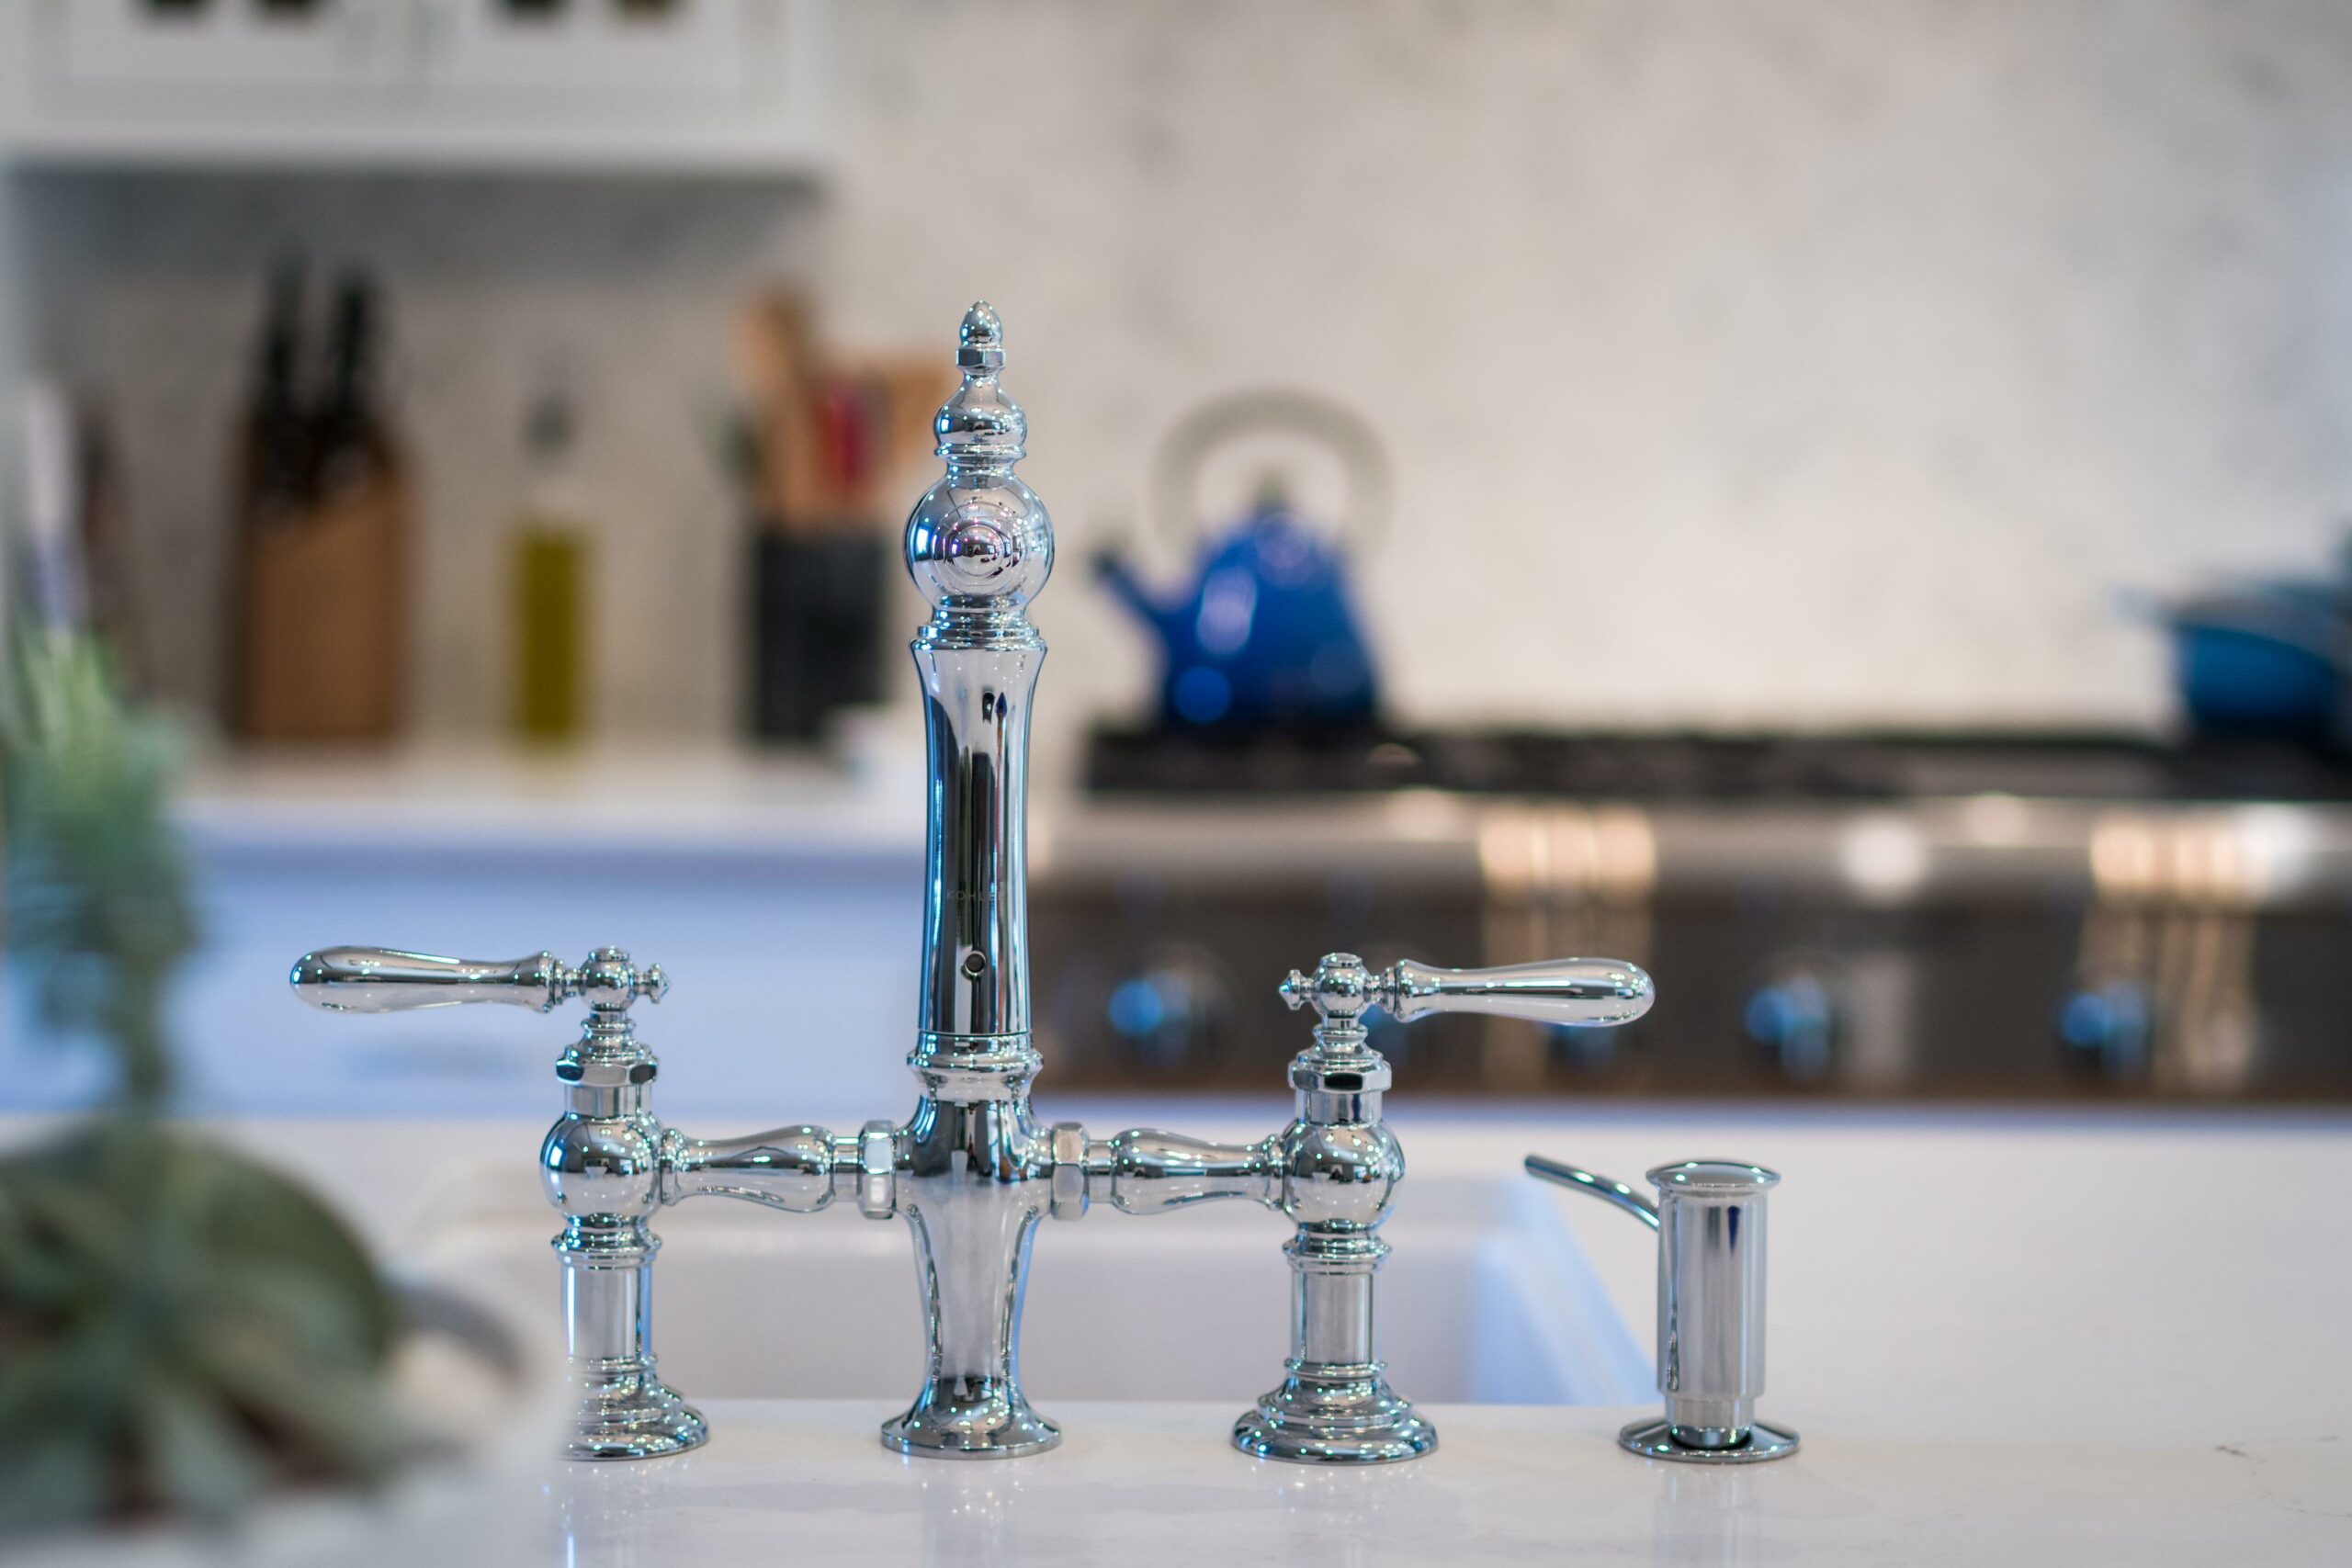 Chrome kitchen faucet on modern white countertop.